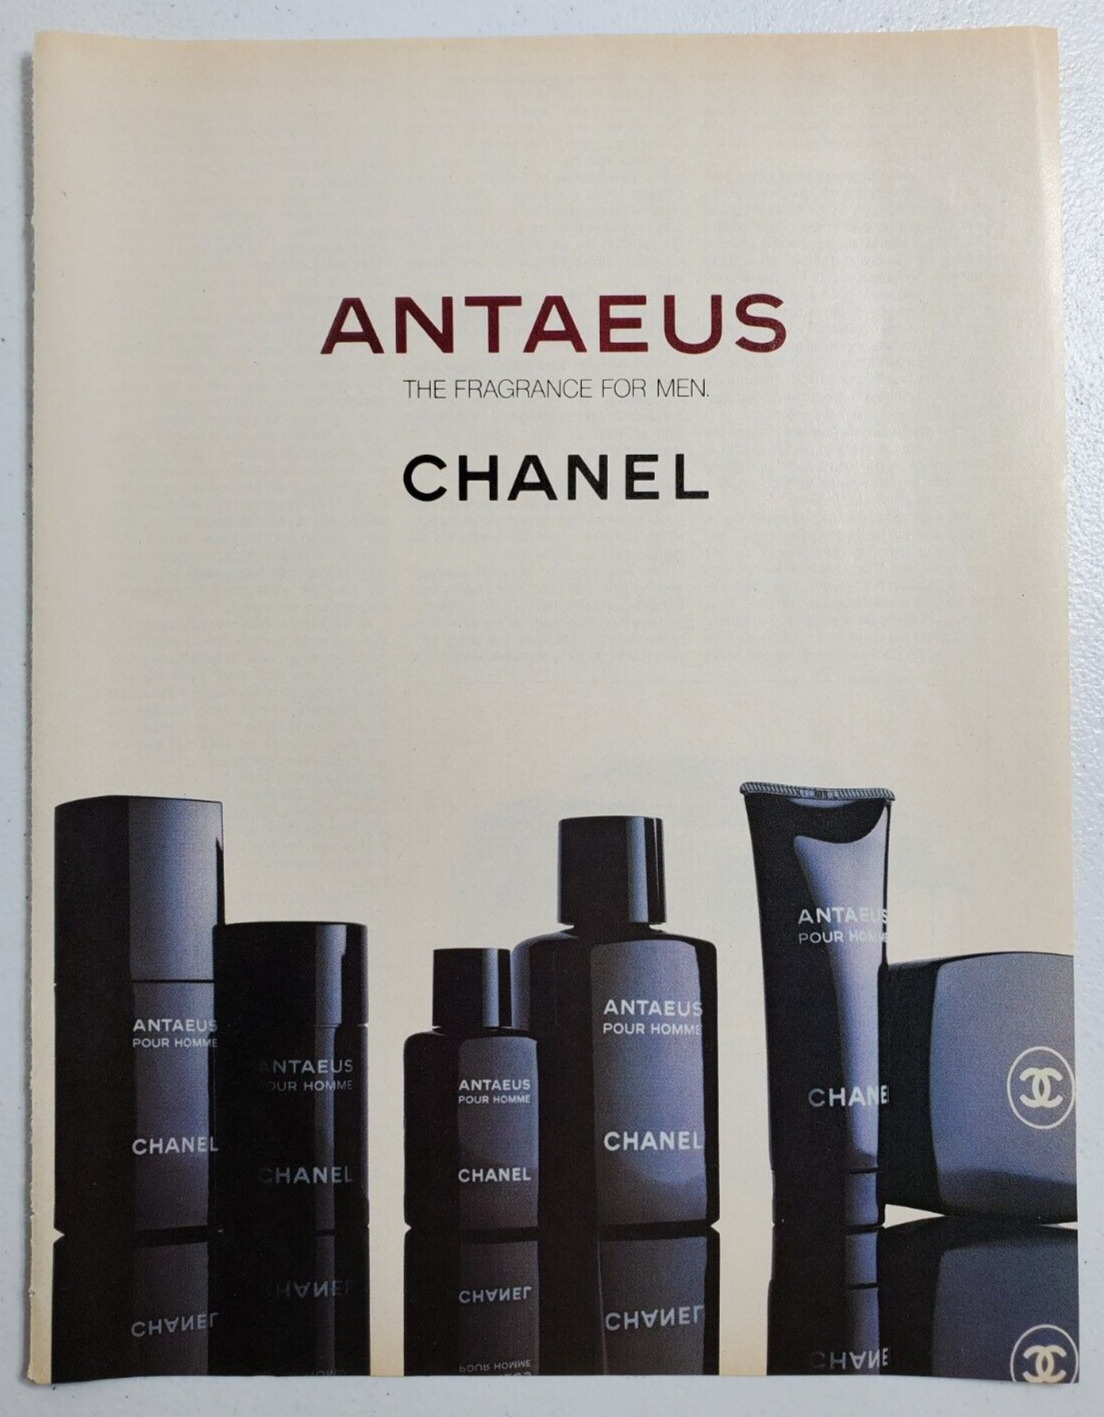 Vintage Antaeus Chanel Magazine Ad